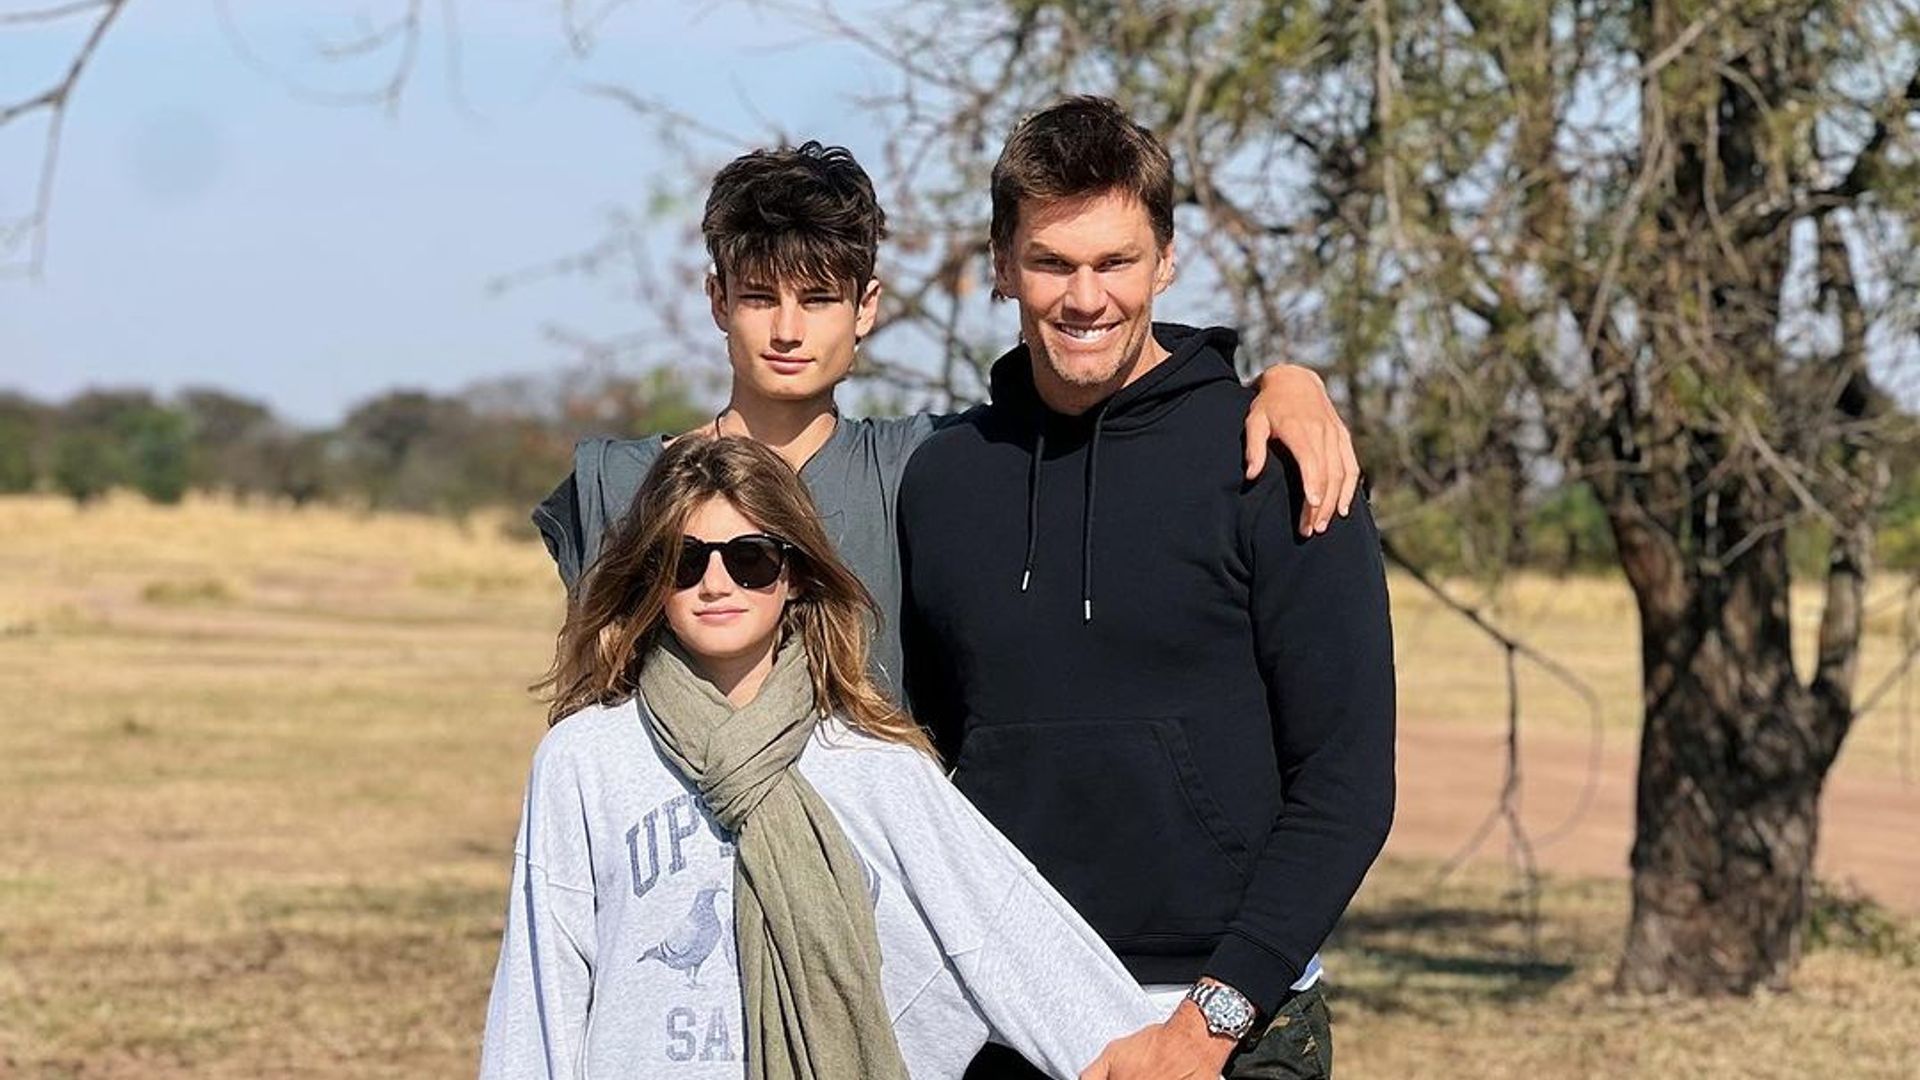 Tom Brady bonds with kids and declares he’s ready for 'next chapter' amid Irina Shayk romance